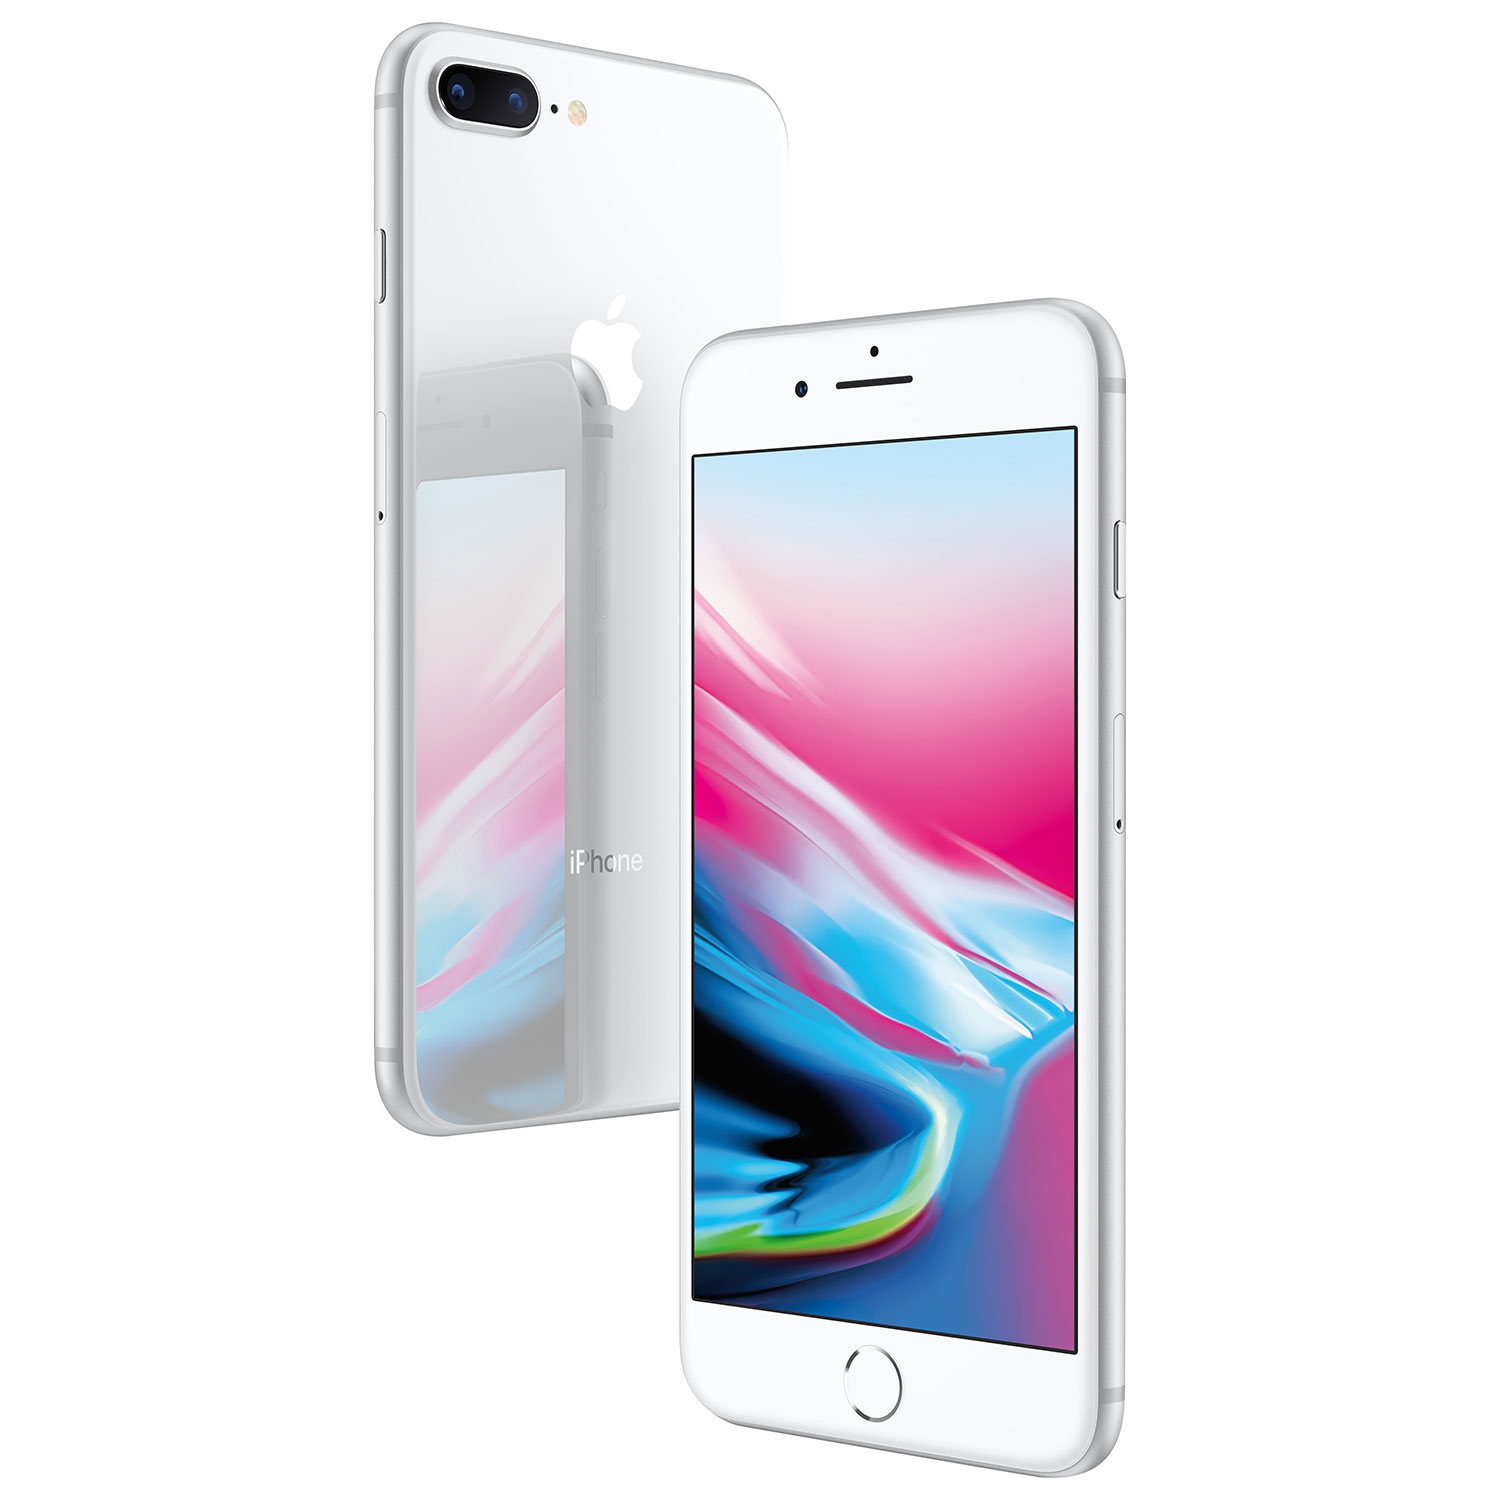 Refurbished (Good) - Apple iPhone 8 Plus 256GB Smartphone - Silver - Unlocked